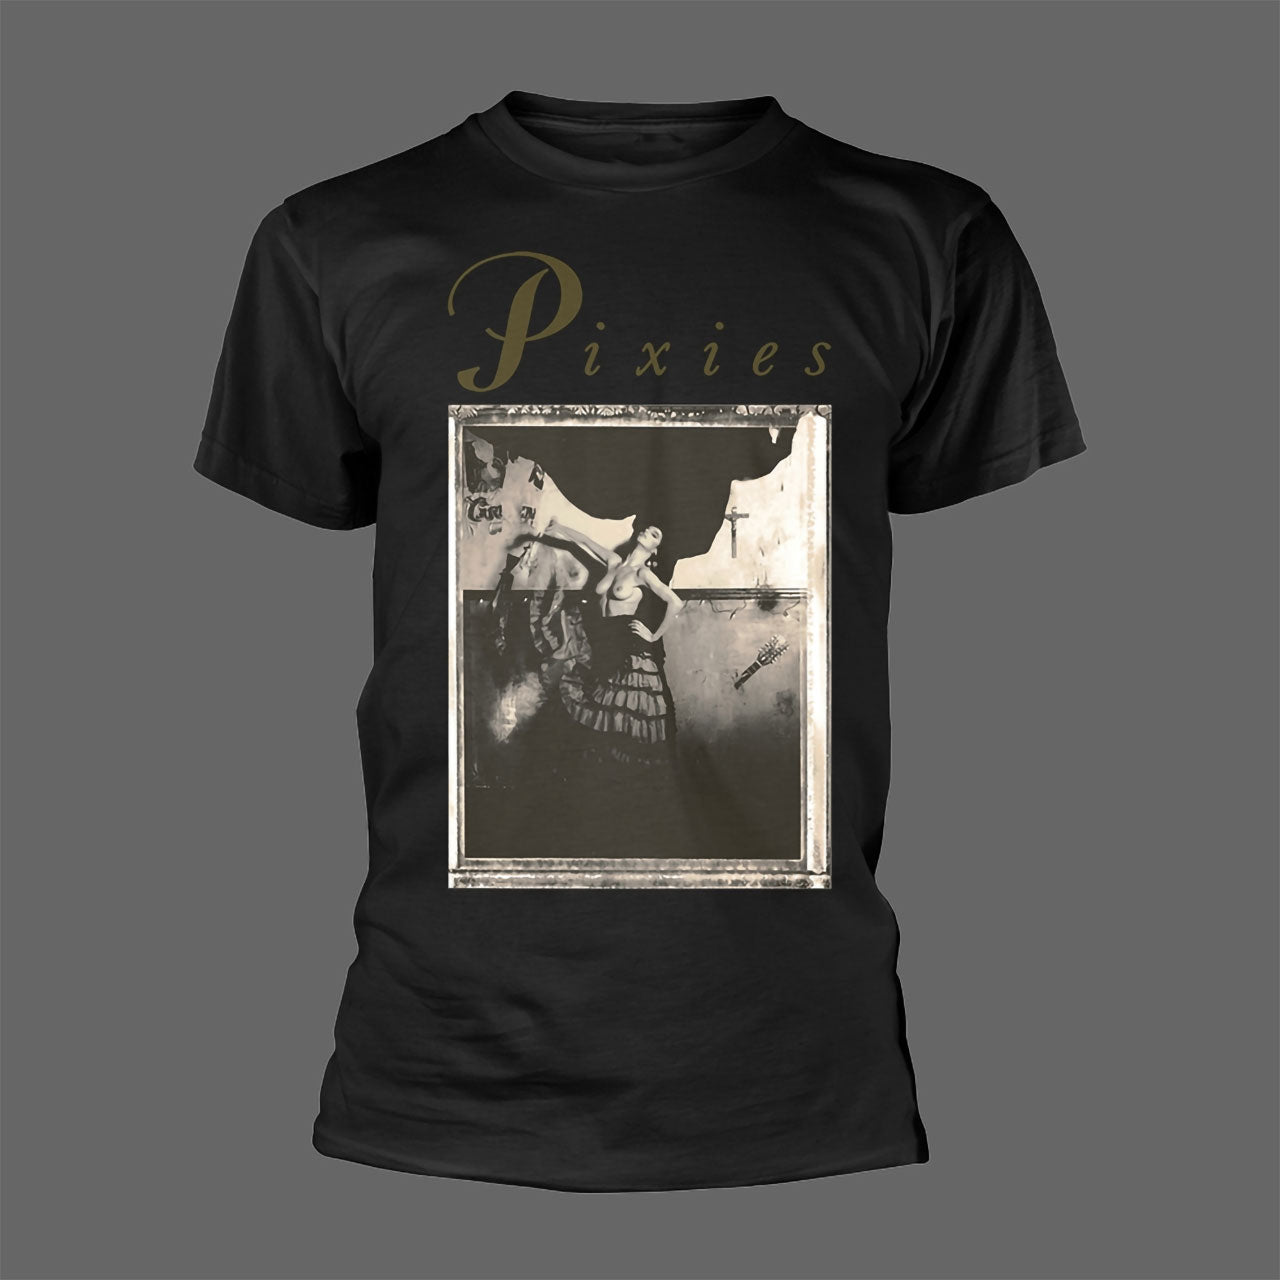 Pixies - Surfer Rosa (Black) (T-Shirt)